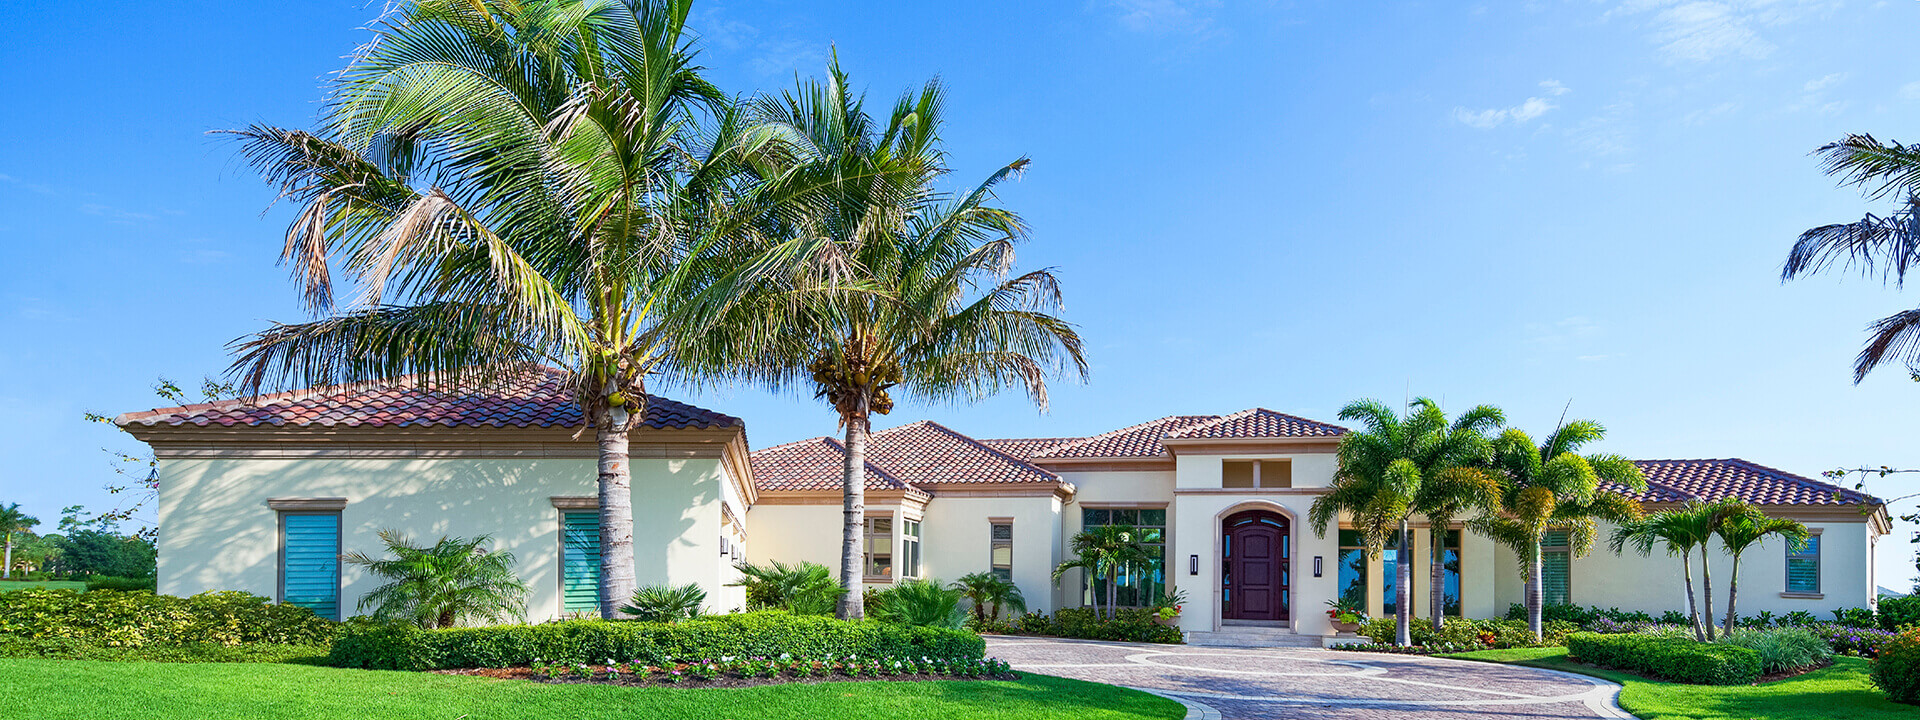 Palm Beach Gardens Real Estate